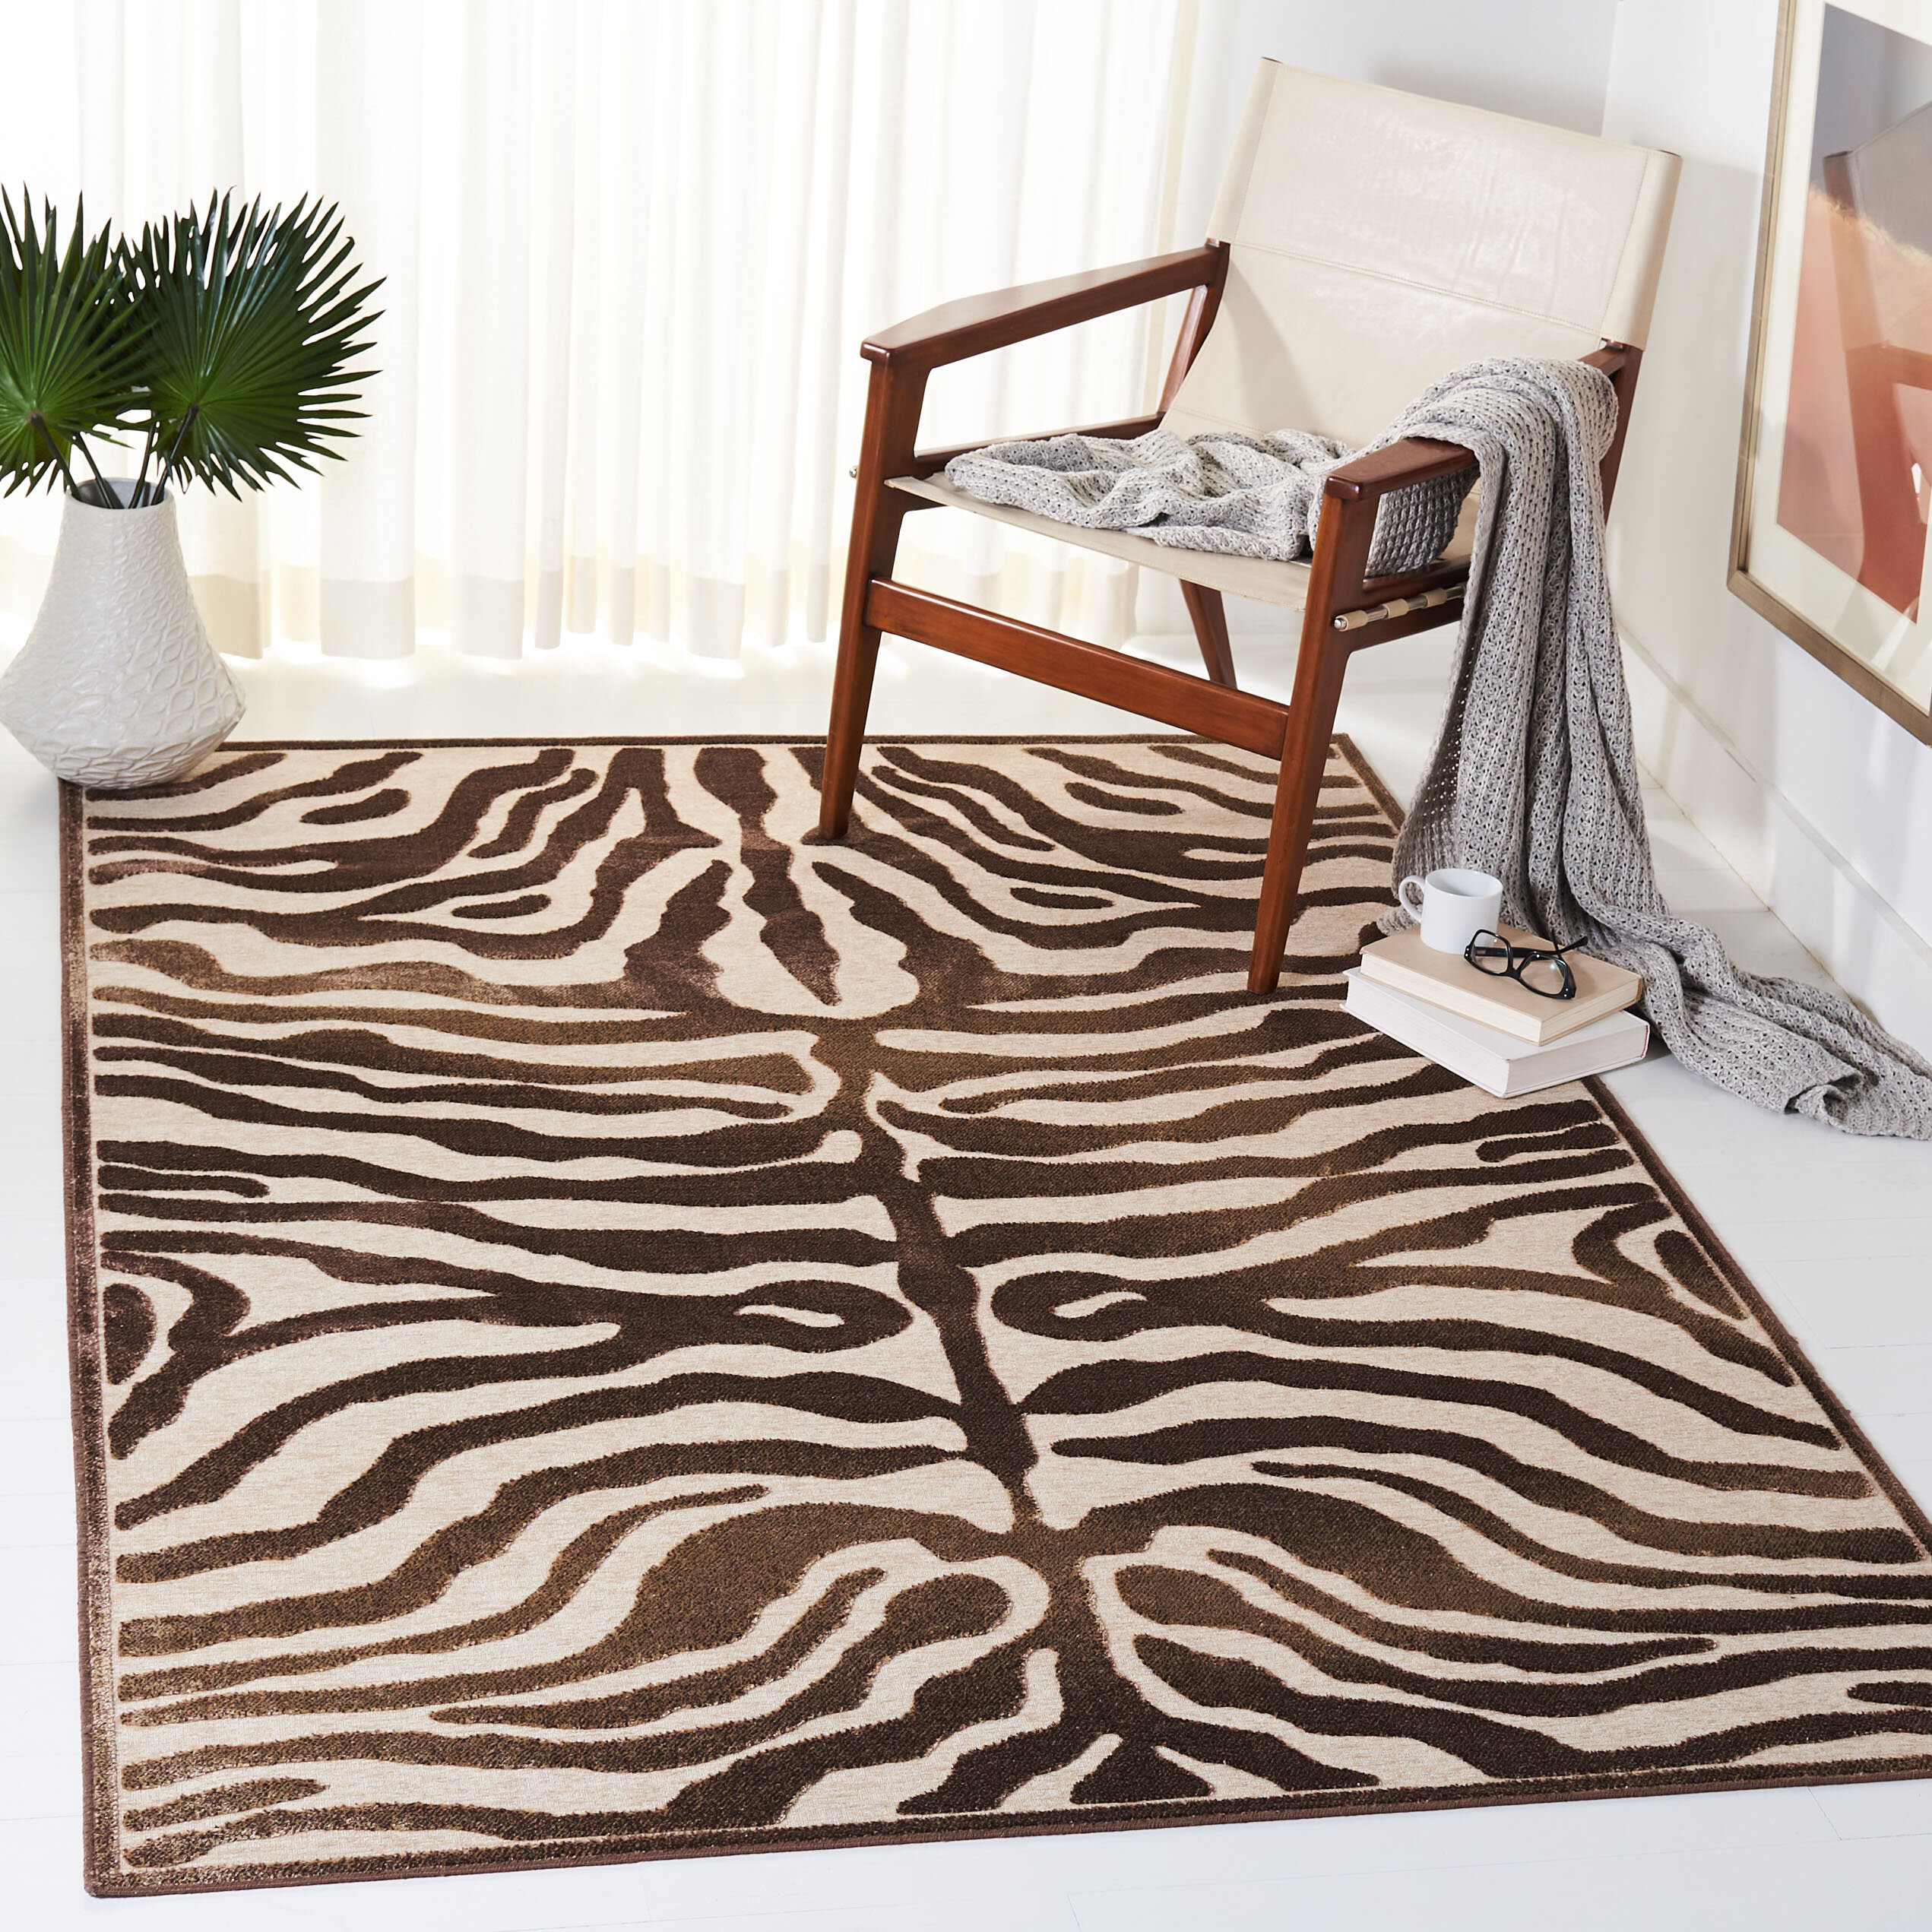 Zebra print animal print carpet